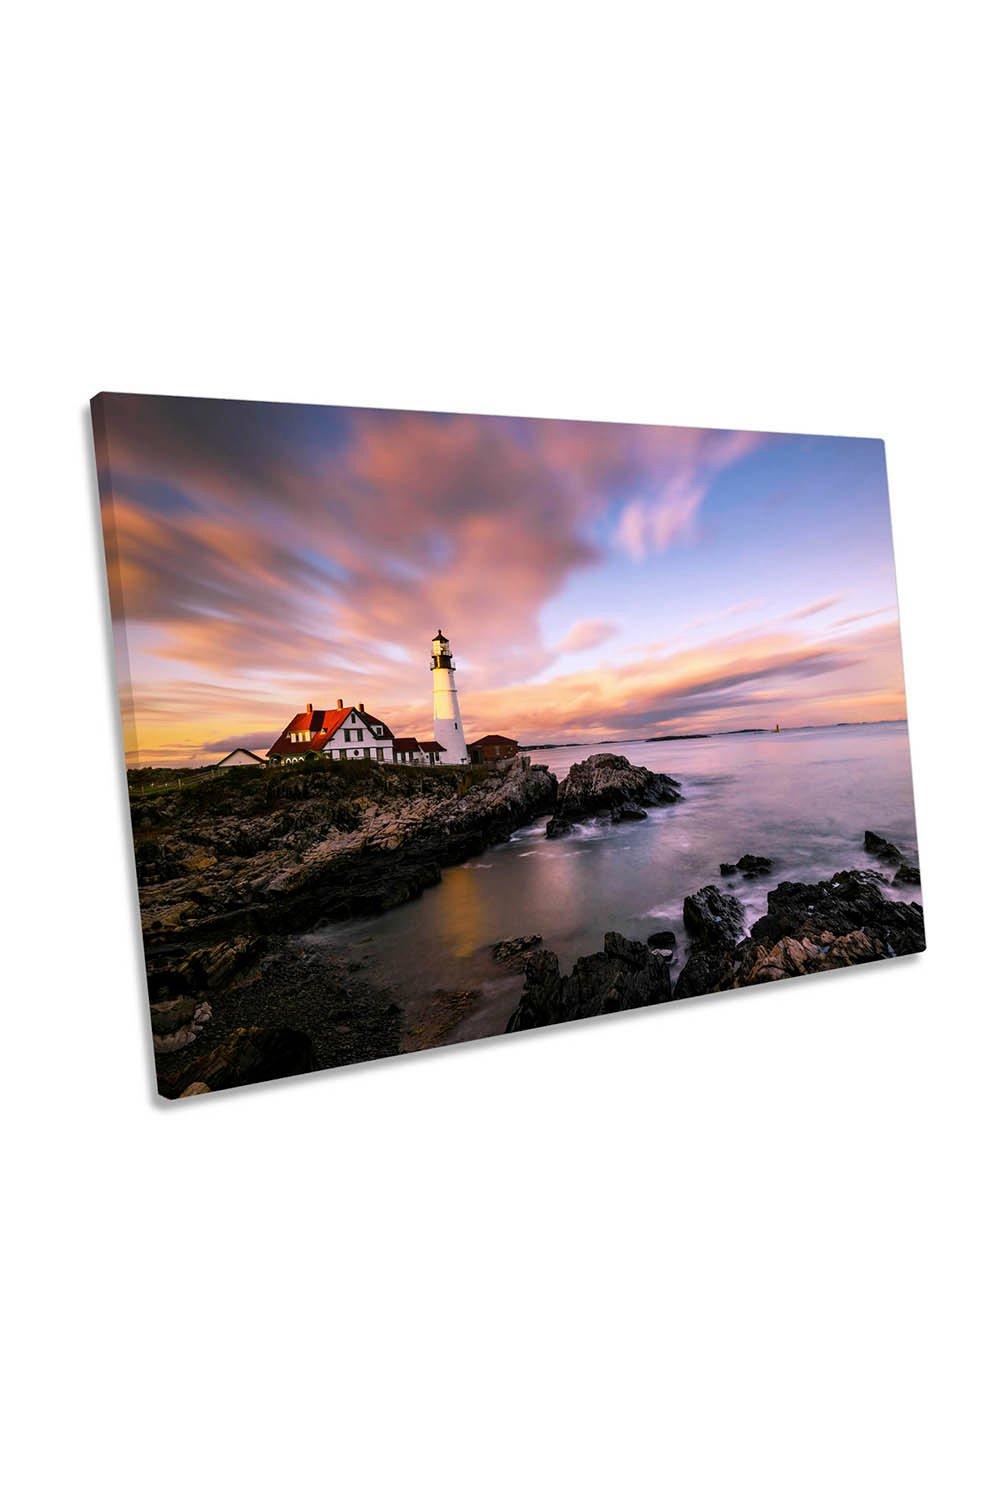 Coastline Sunset Lighthouse Seascape Canvas Wall Art Picture Print